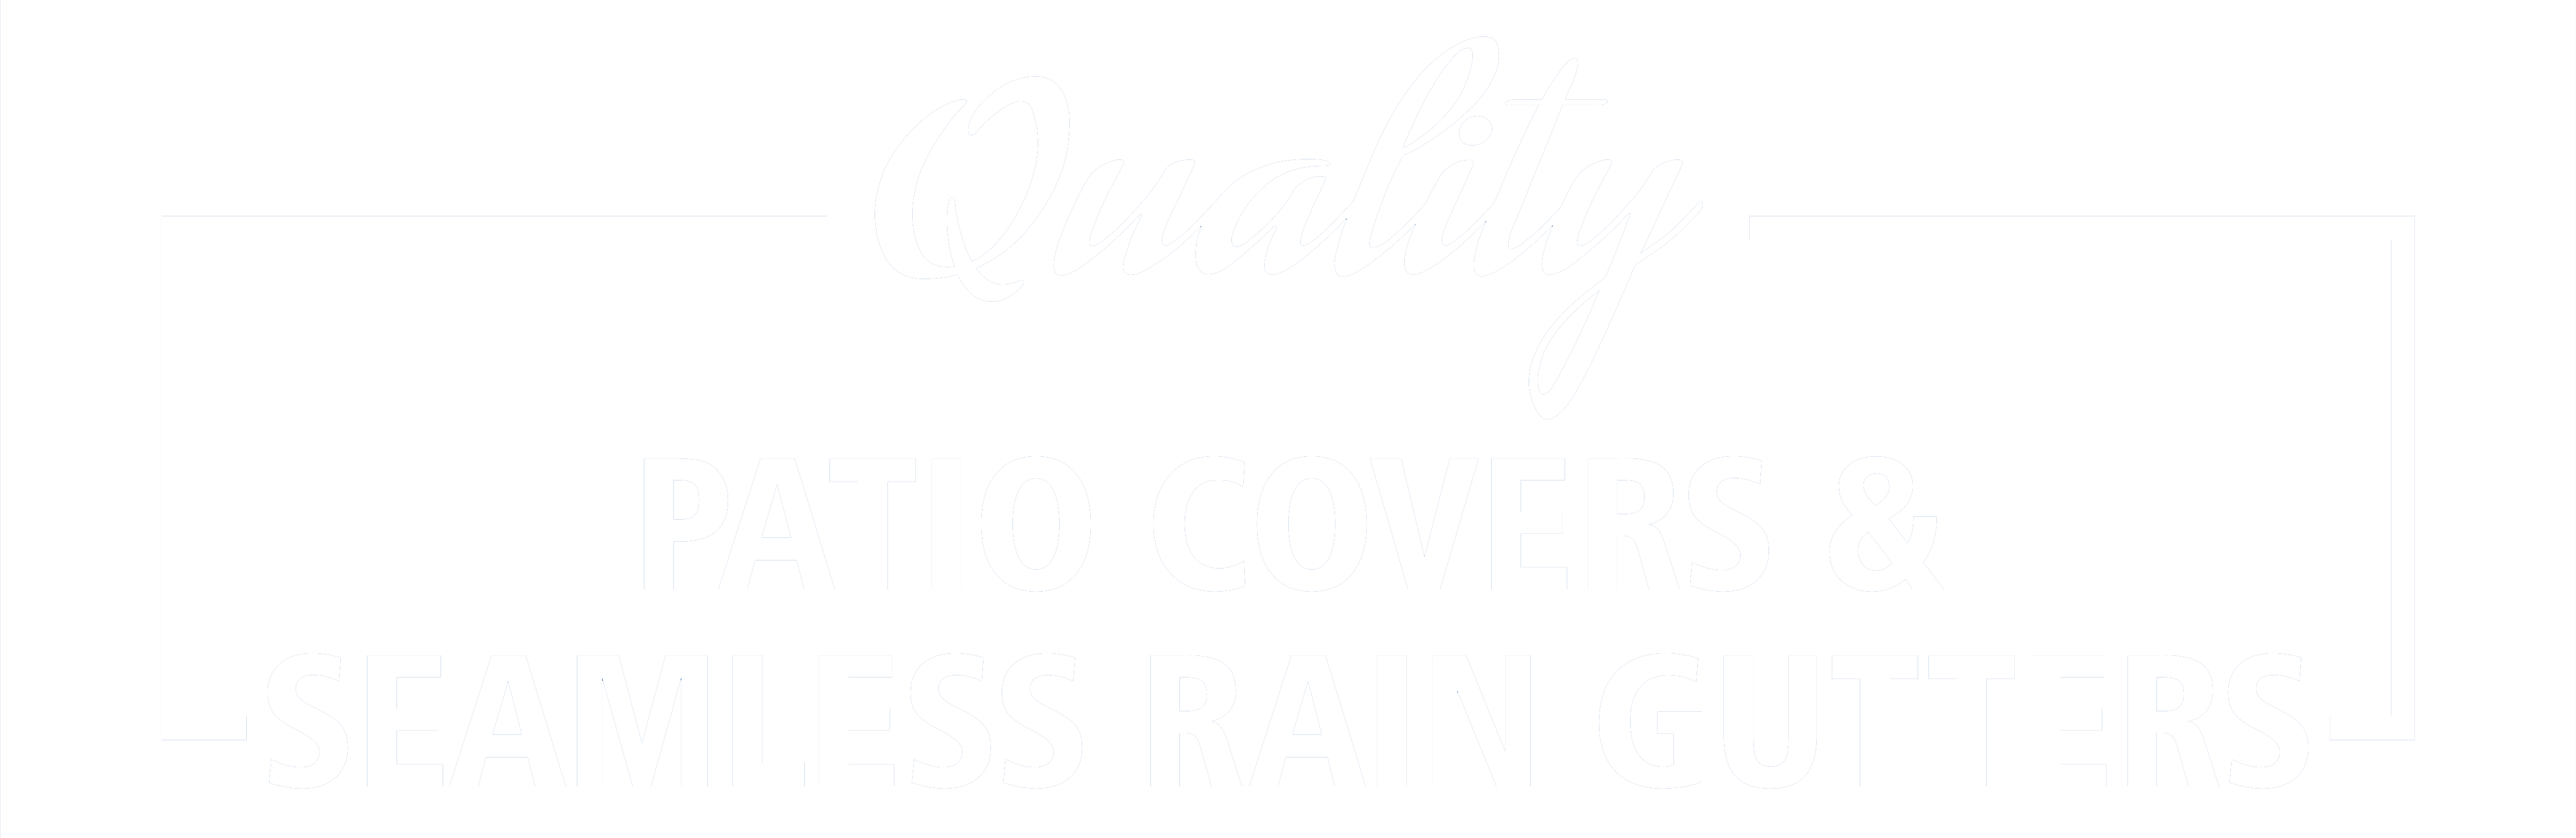 Patio Covers & Seamless Rain Gutters